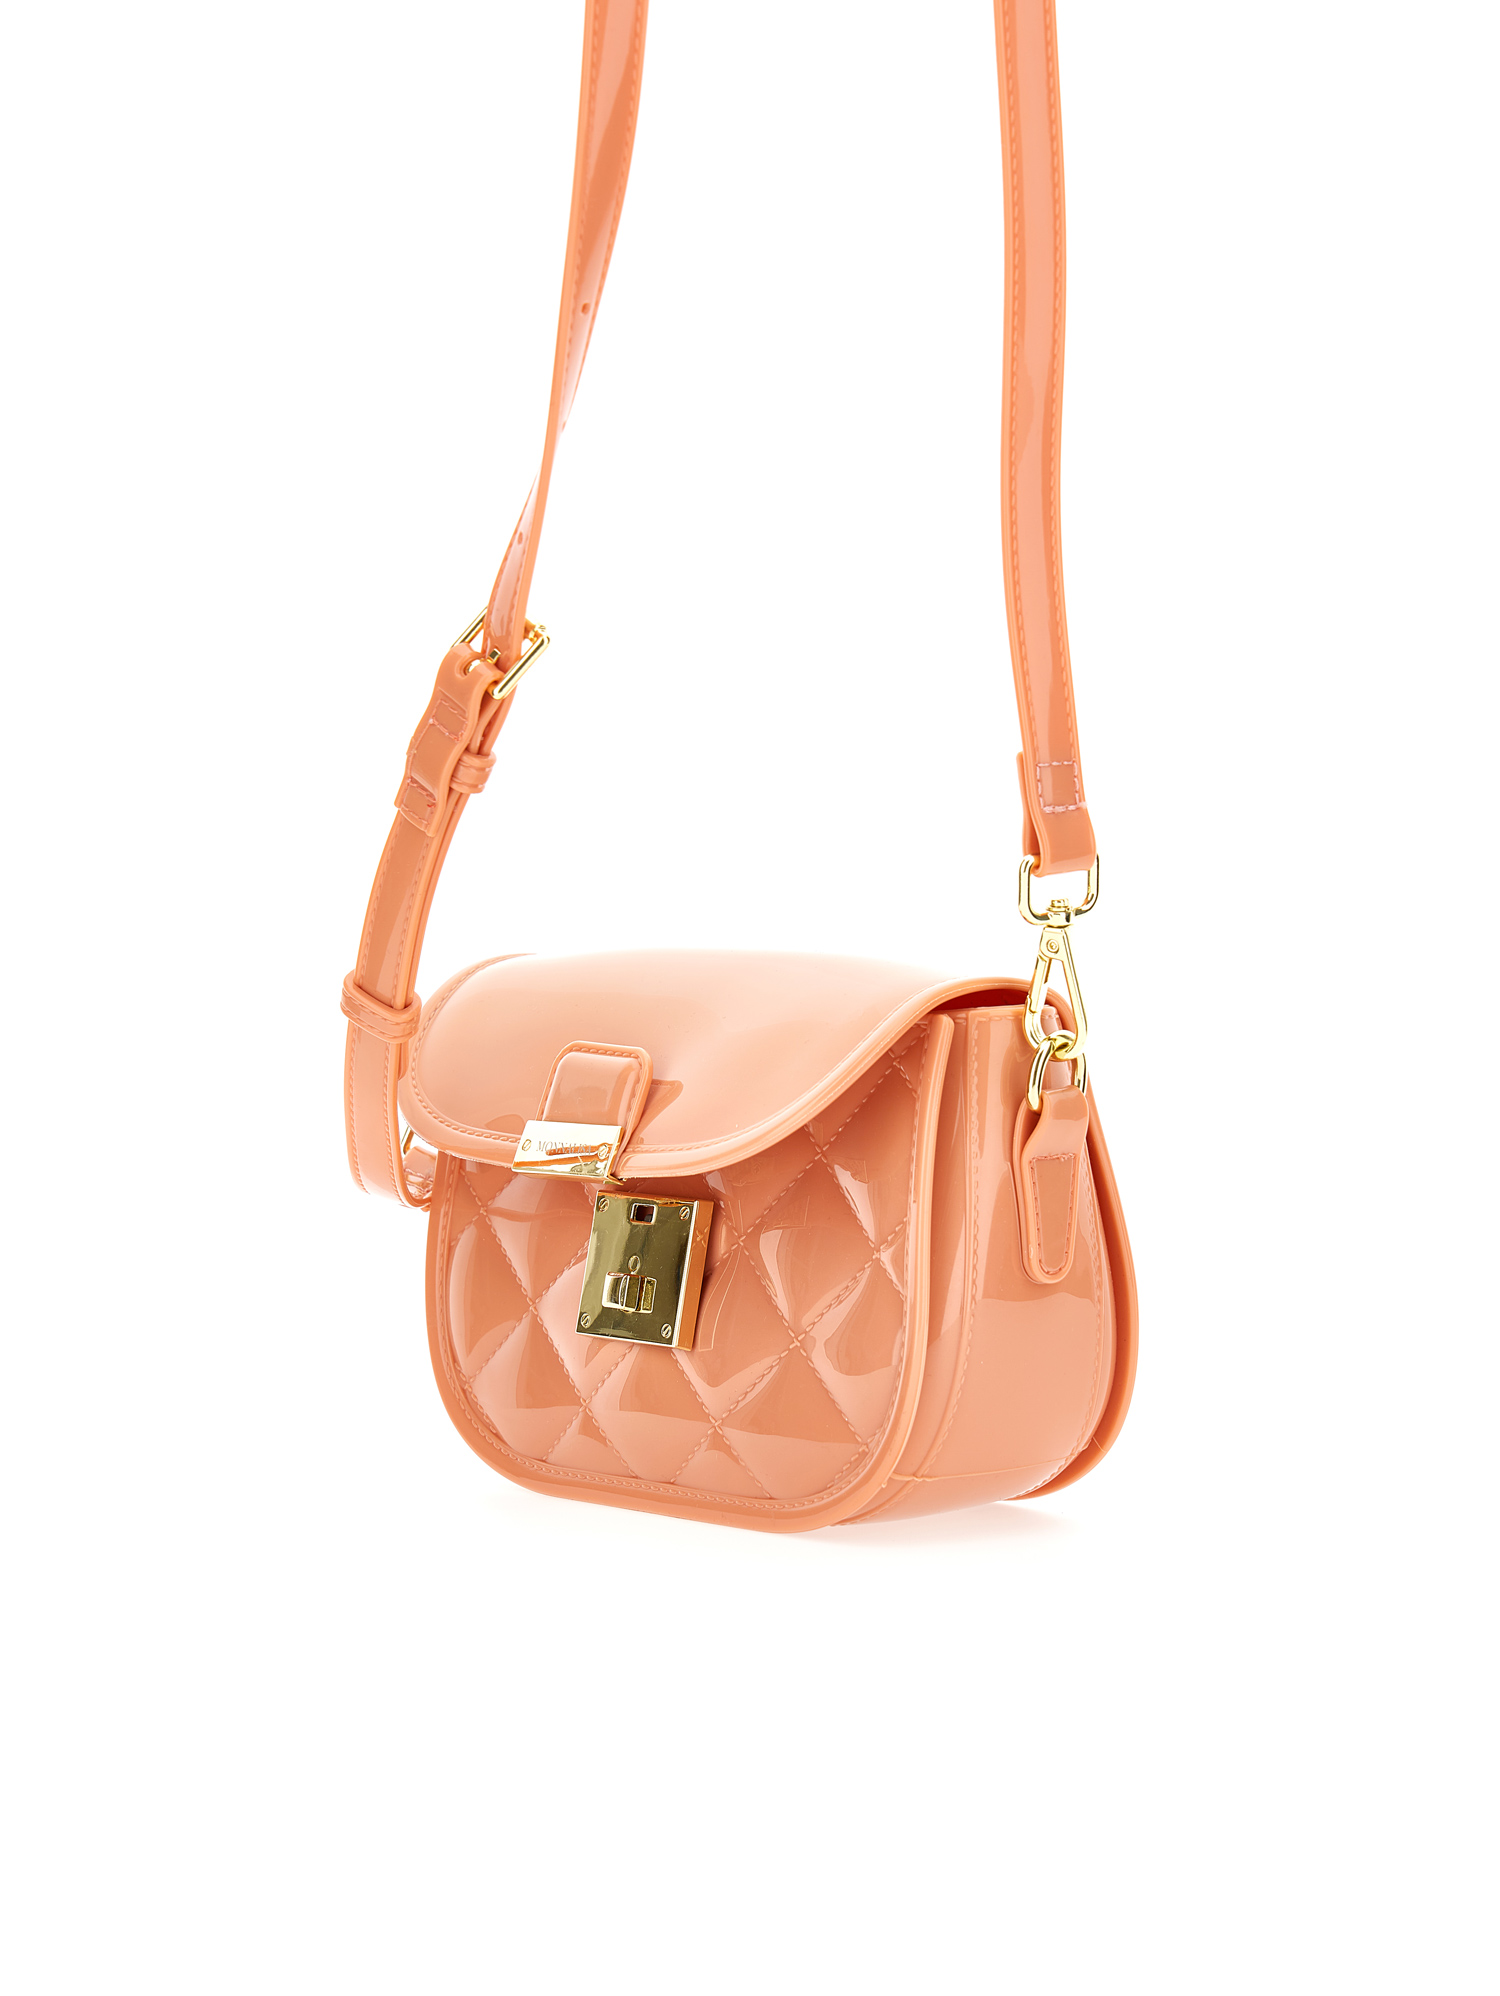 Shop Monnalisa Pvc Bag With Shoulder Strap In Dusty Pink Rose